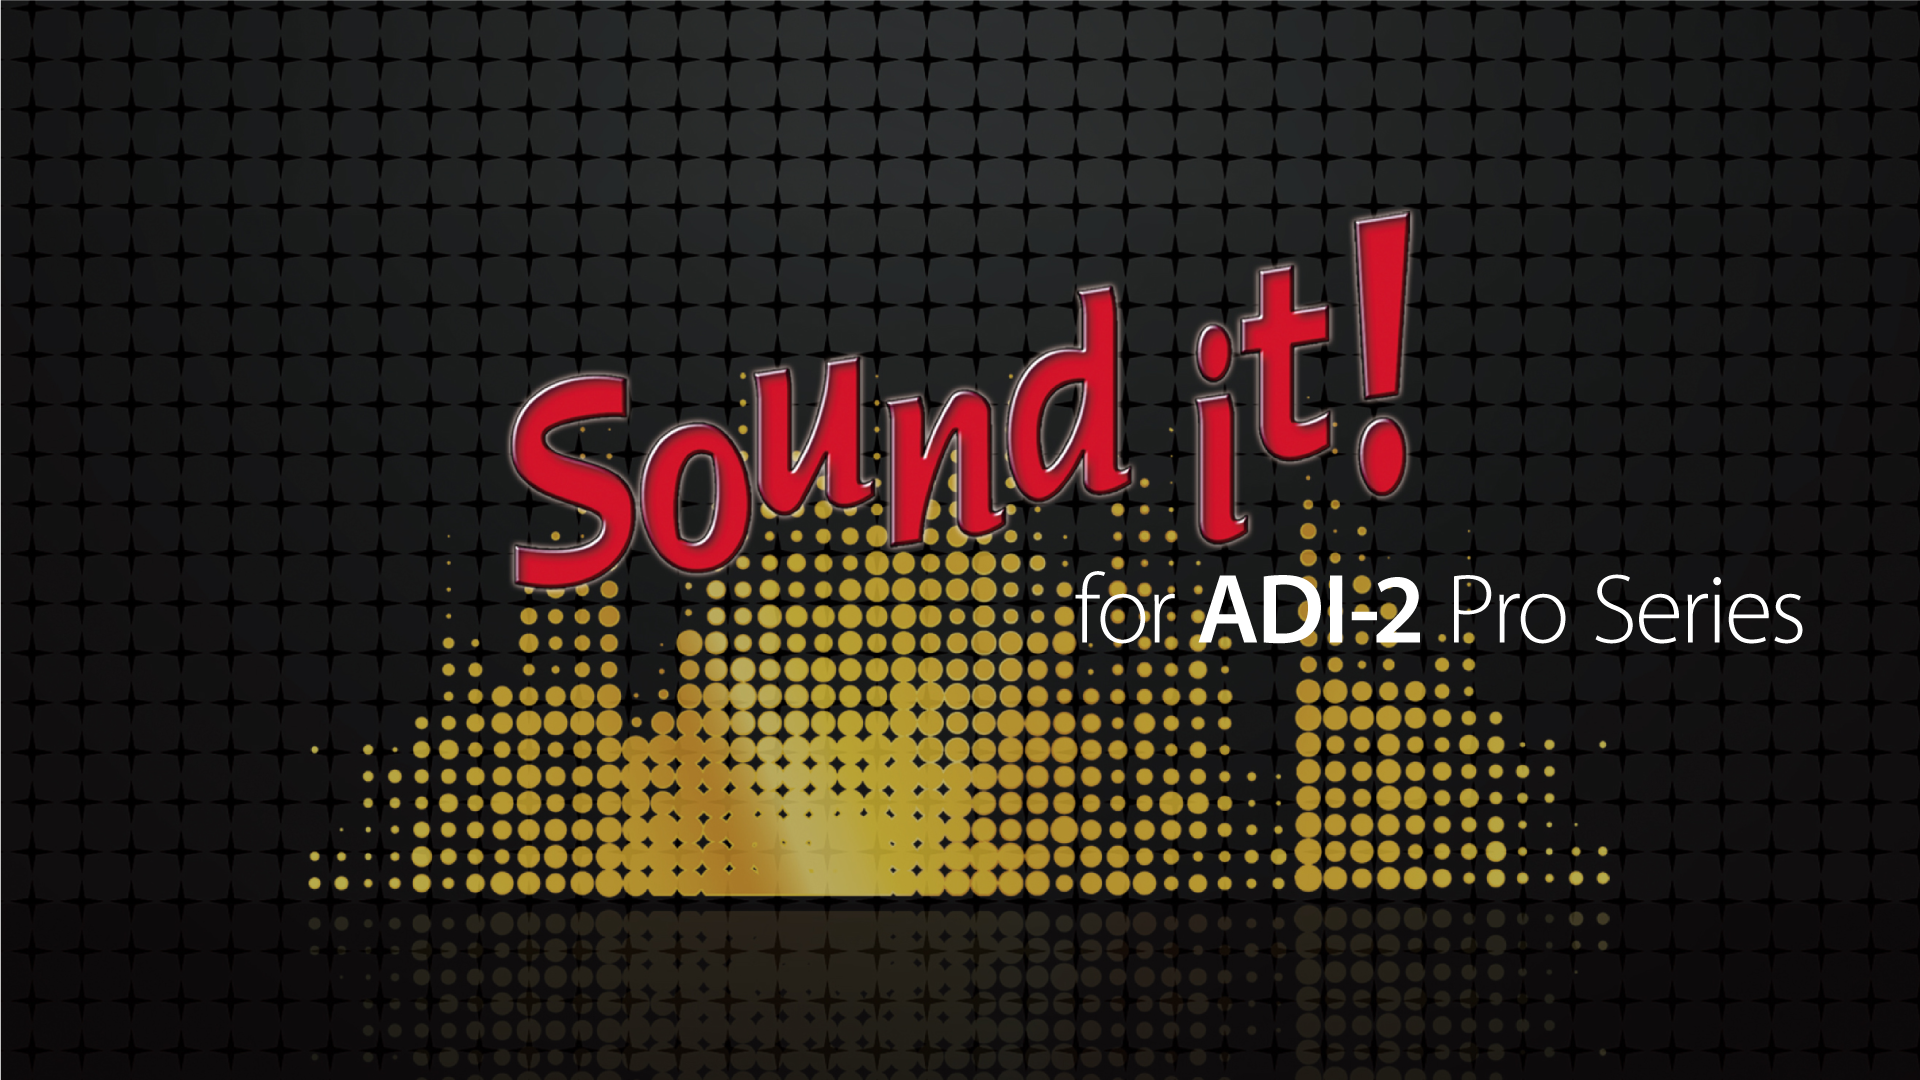 Sound it! for ADI-2 Pro